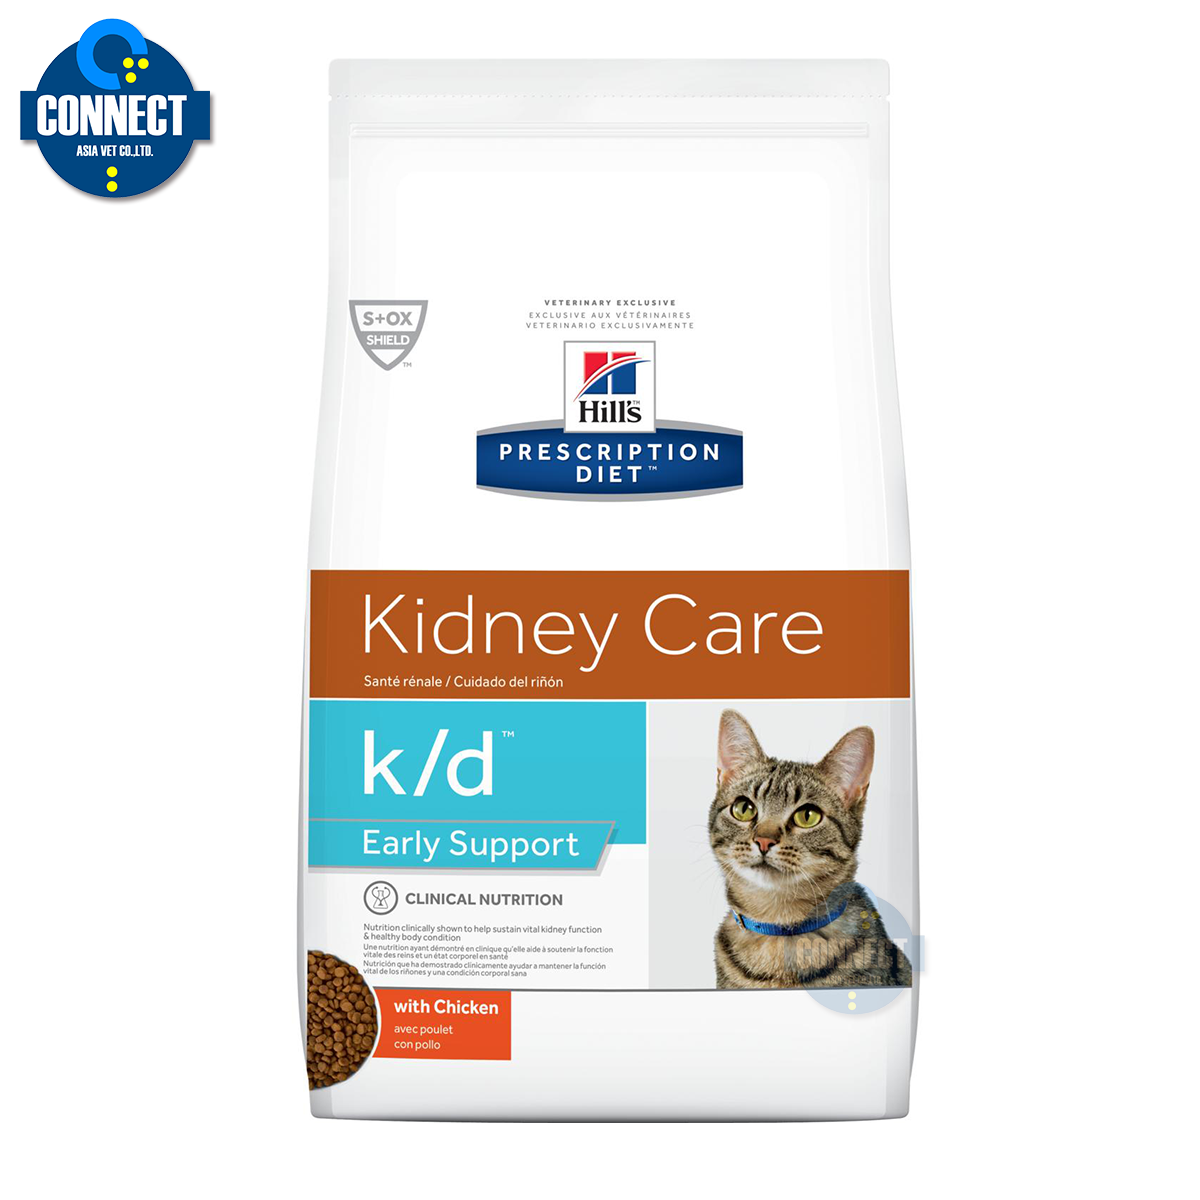 Hill's® Prescription Diet® k/d® Early Support Feline Chicken Dry Food อาหารสำหรับปัญหาโรคไตแมวระยะแรก ขนาดถุง 1.8 กิโลกรัม,3.85 กิโลกรัม.